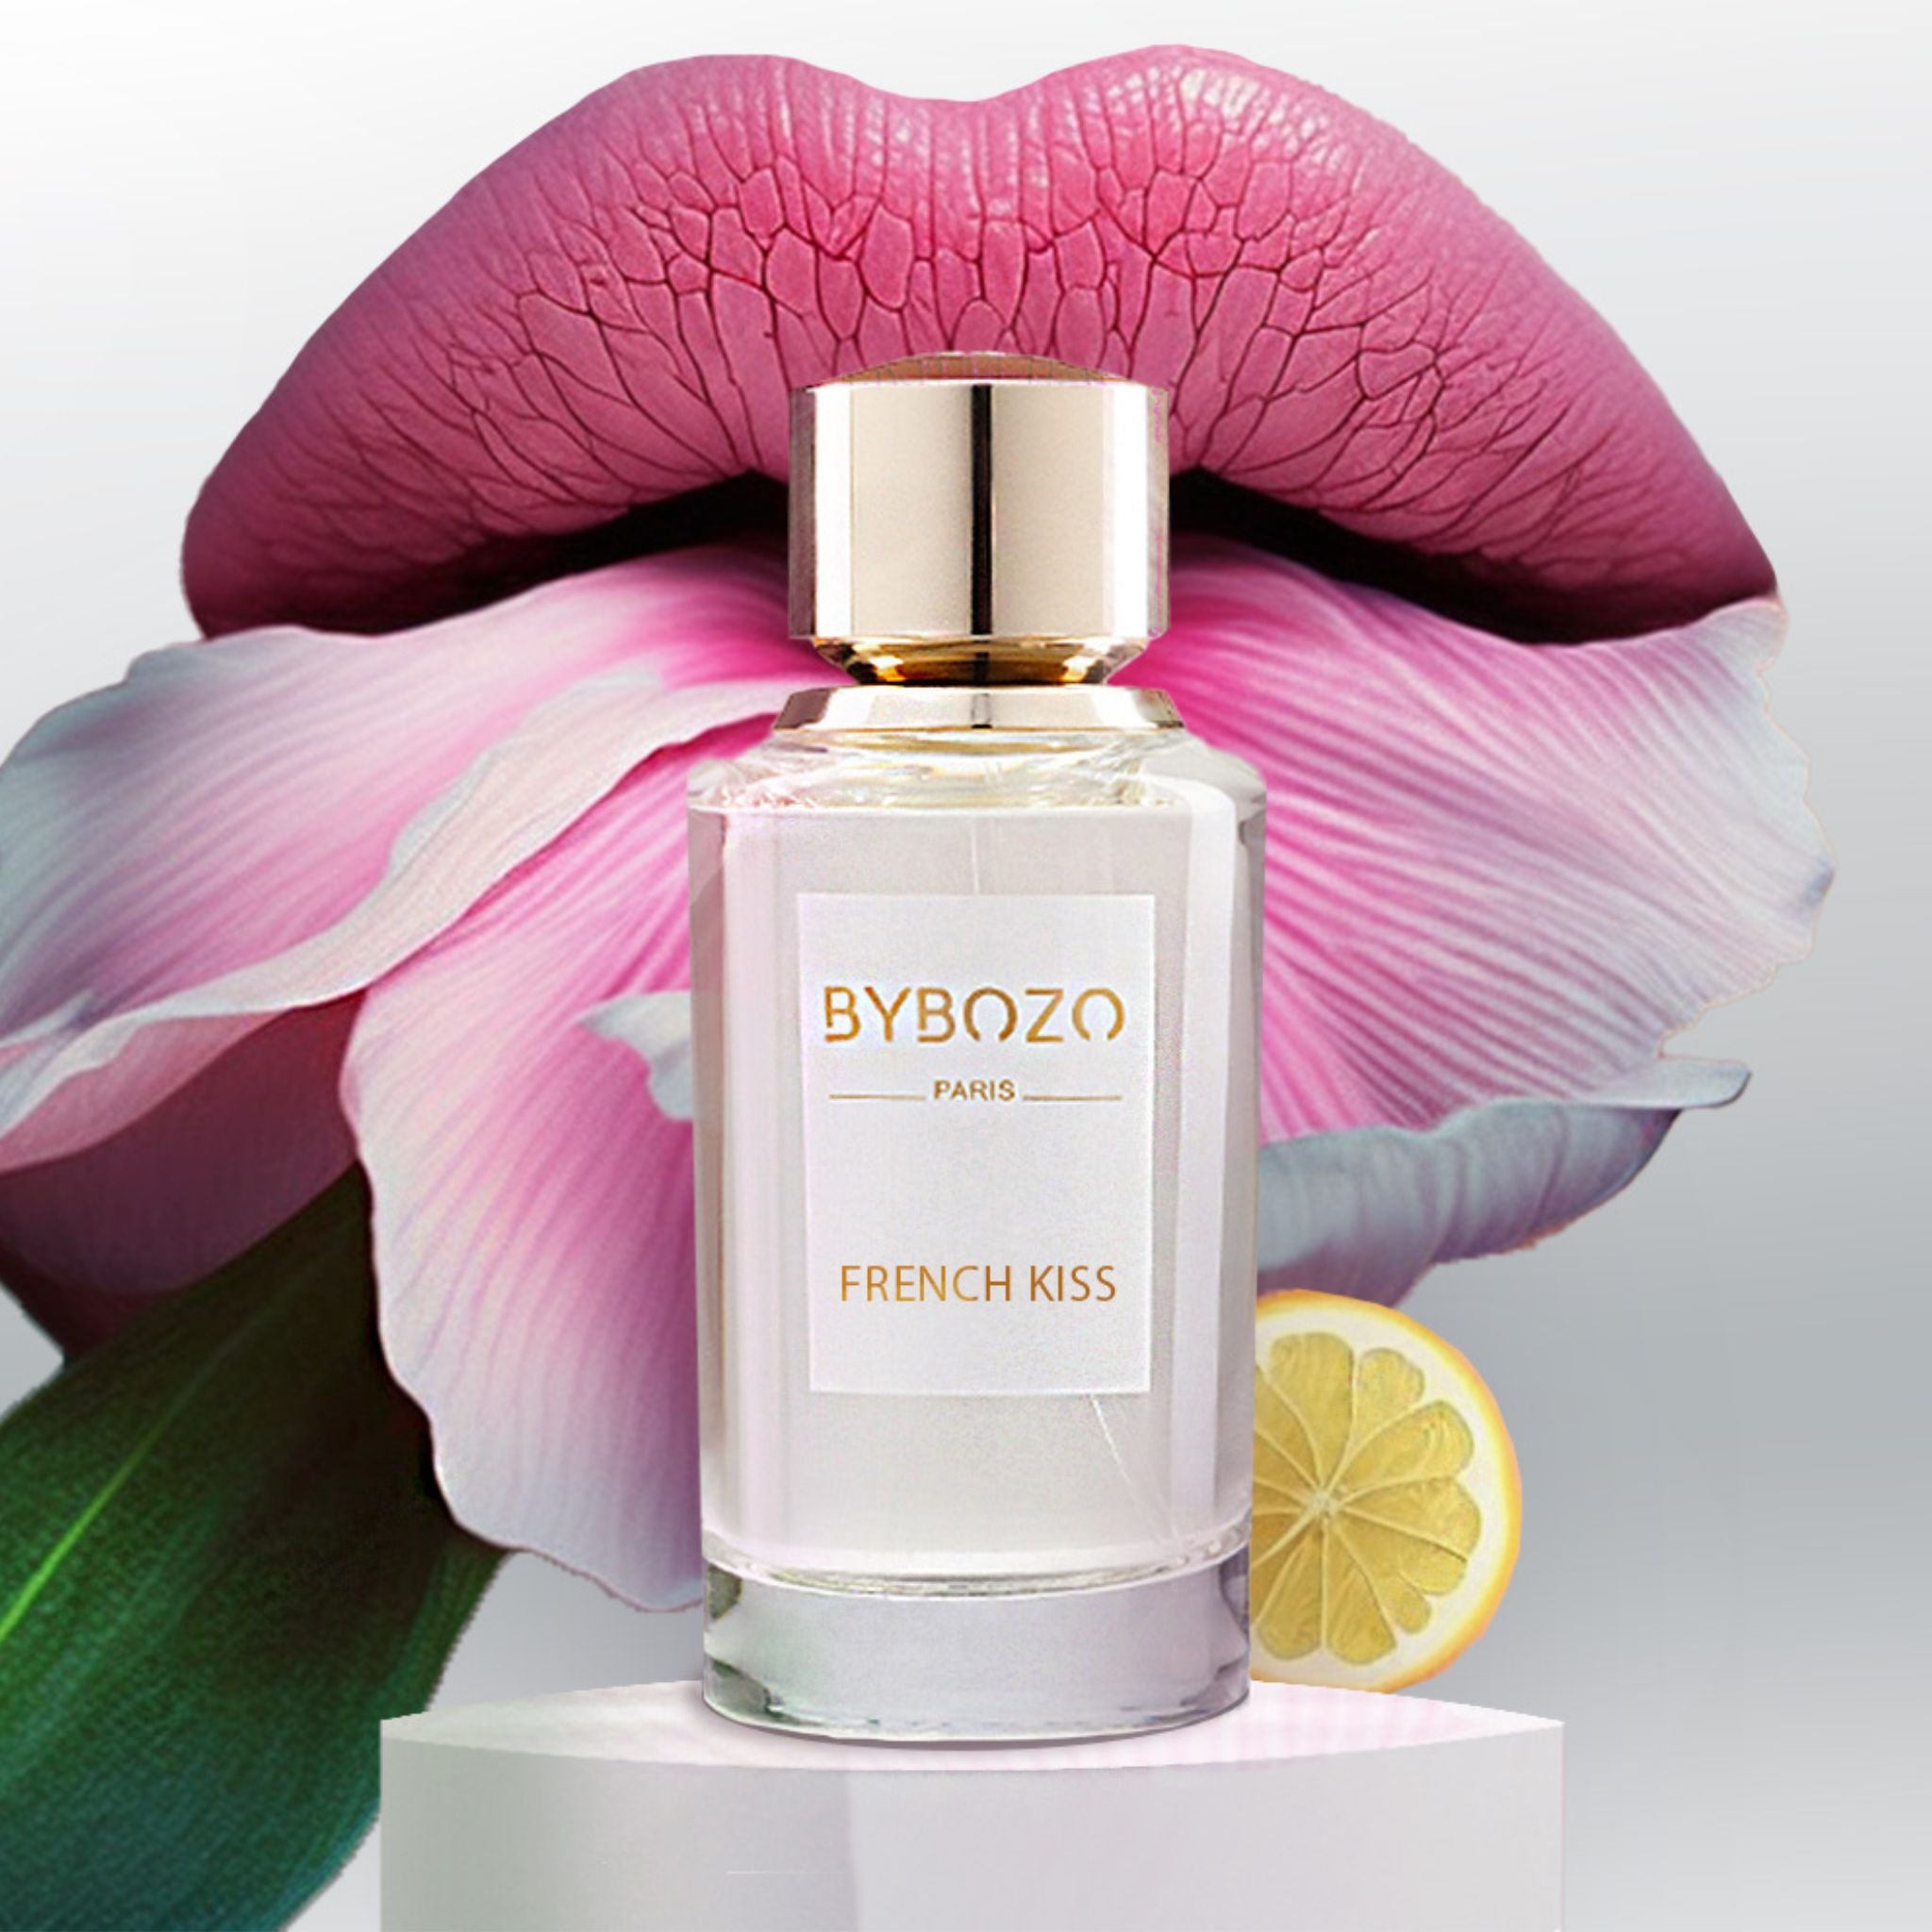 French Kiss bybozo perfume